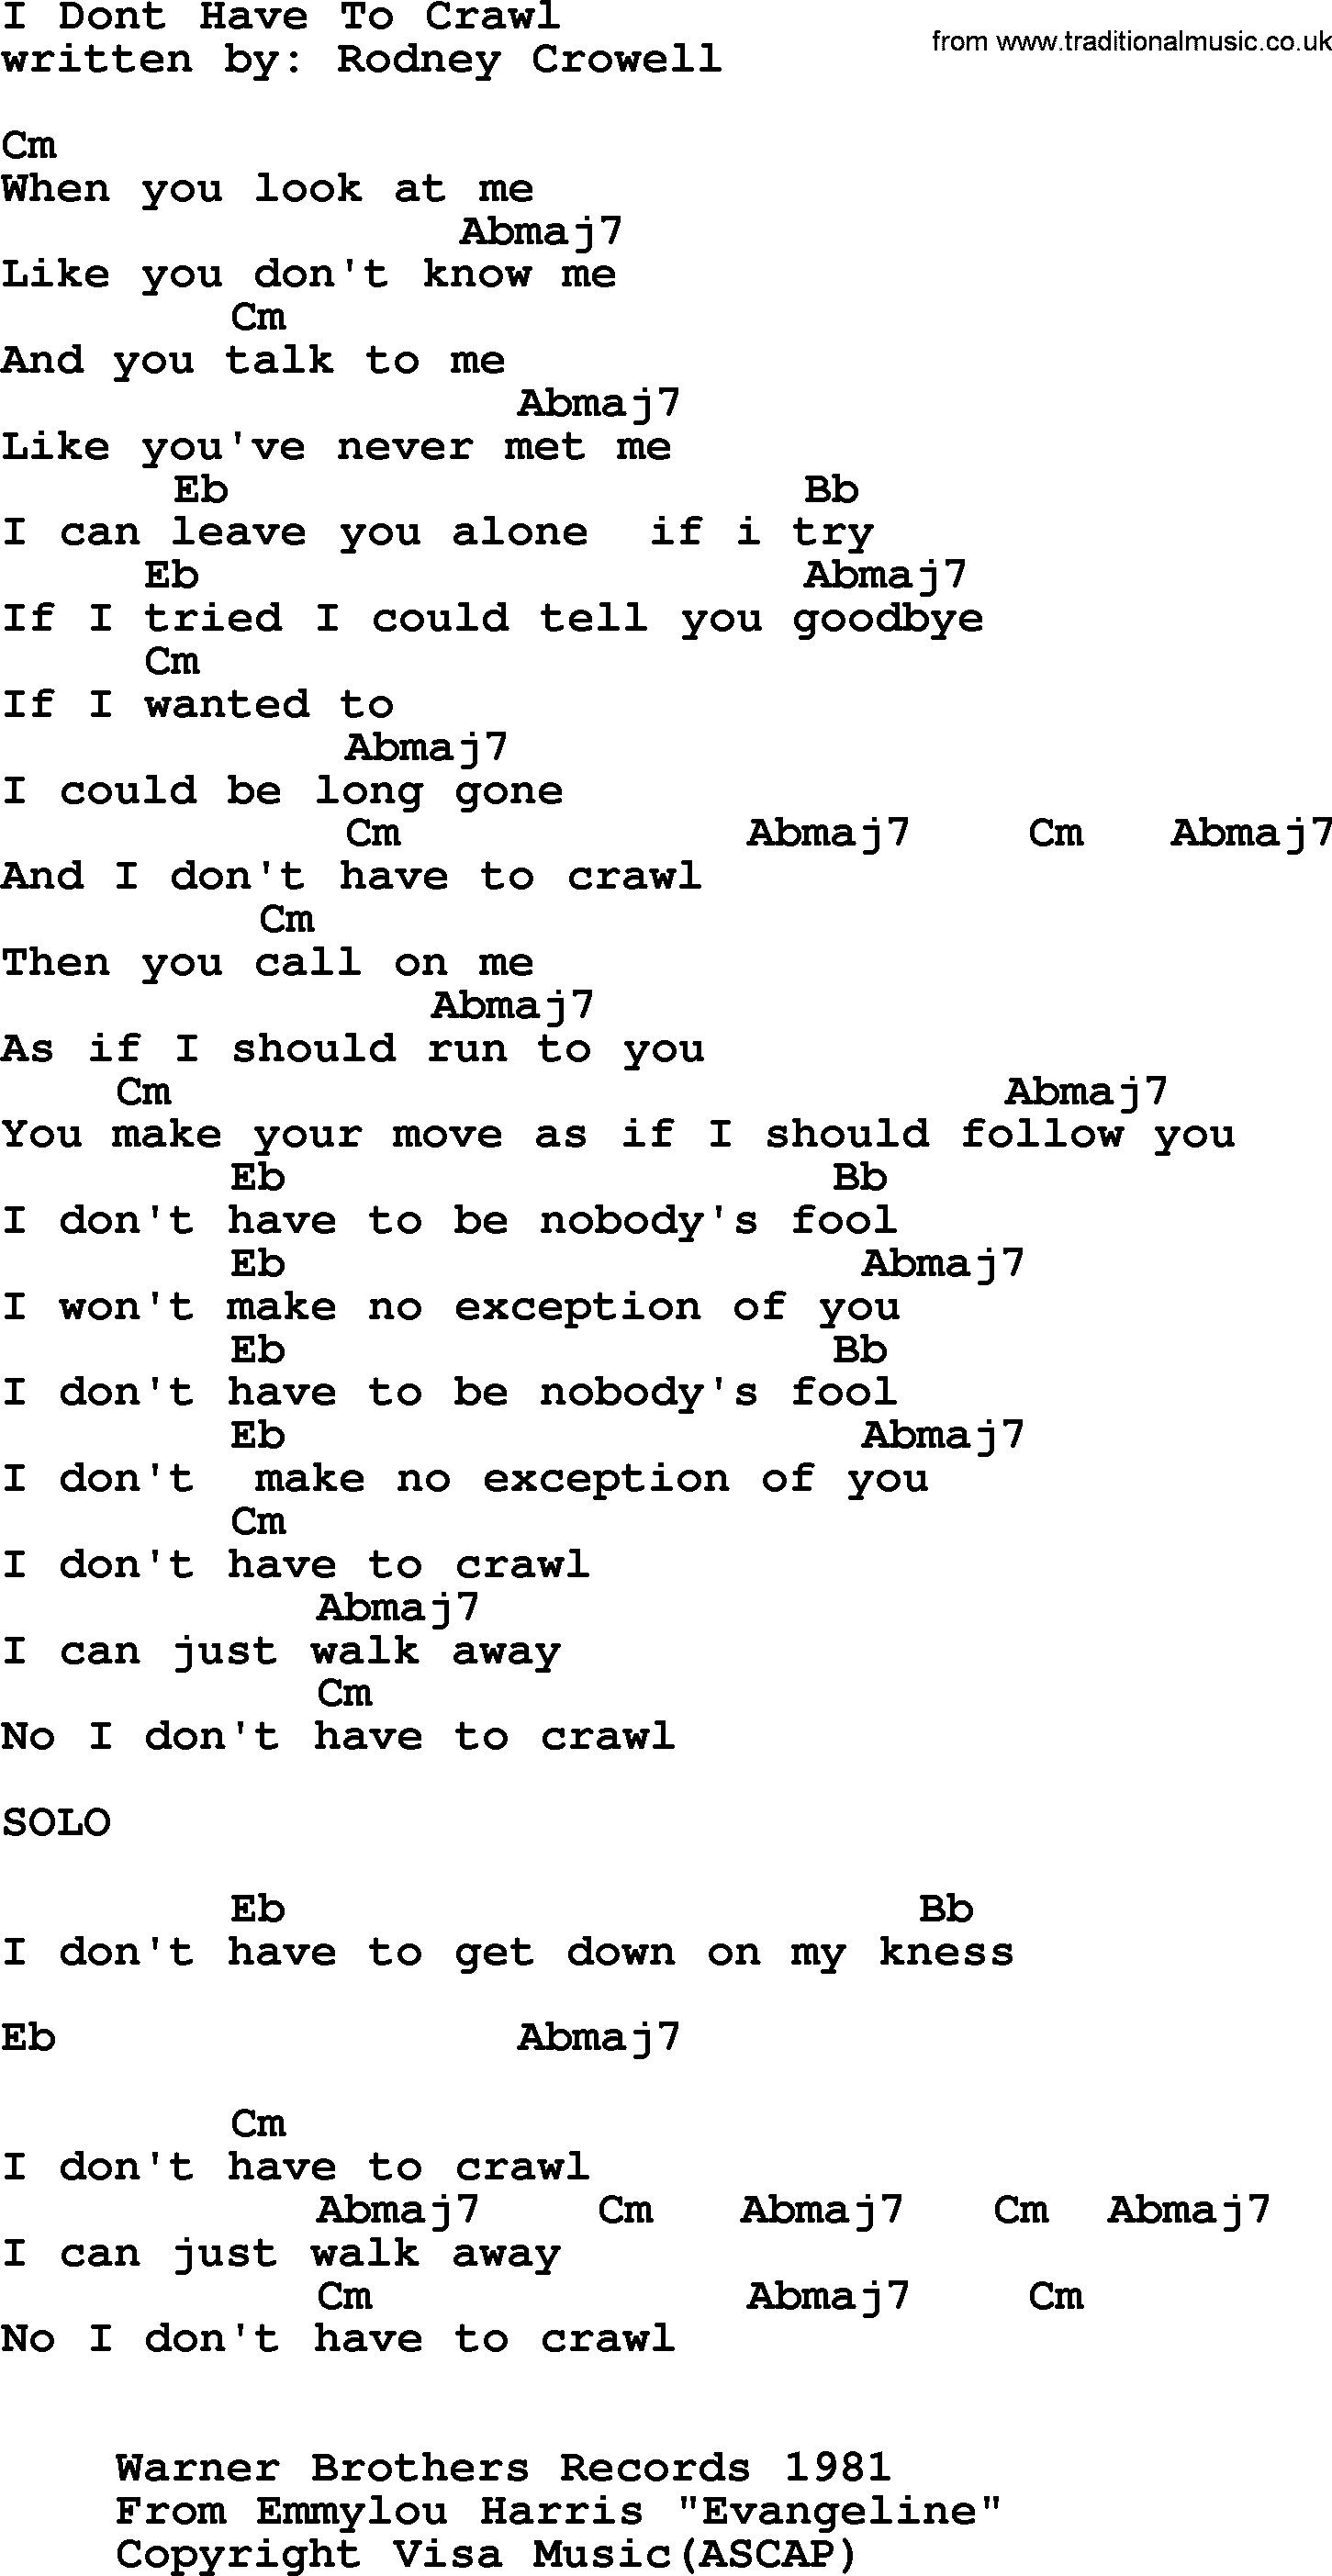 Emmylou Harris song: I Dont Have To Crawl lyrics and chords